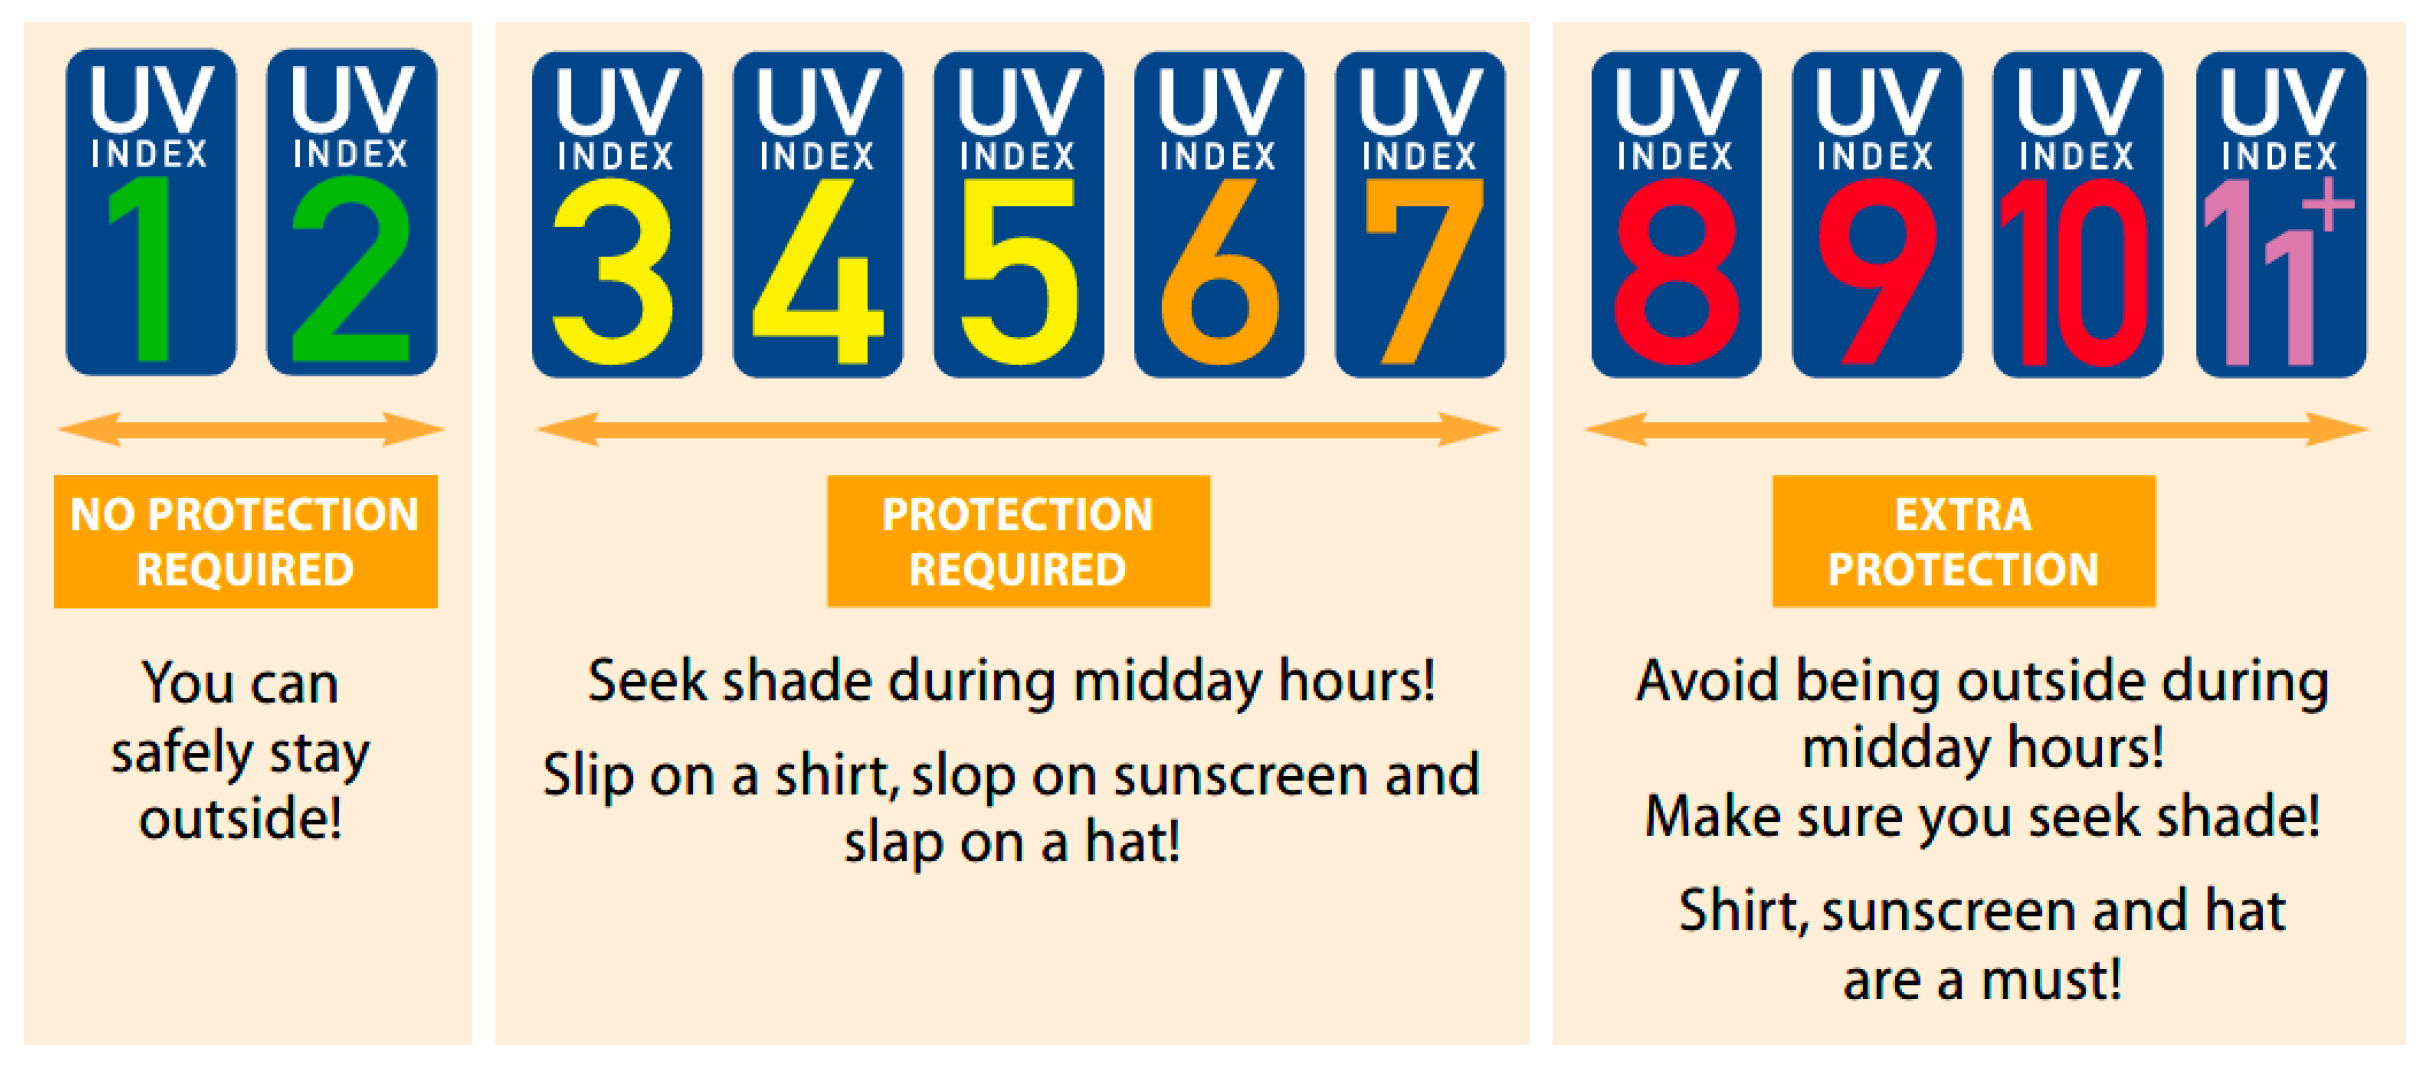   Mức chỉ số tia UV theo WHO  